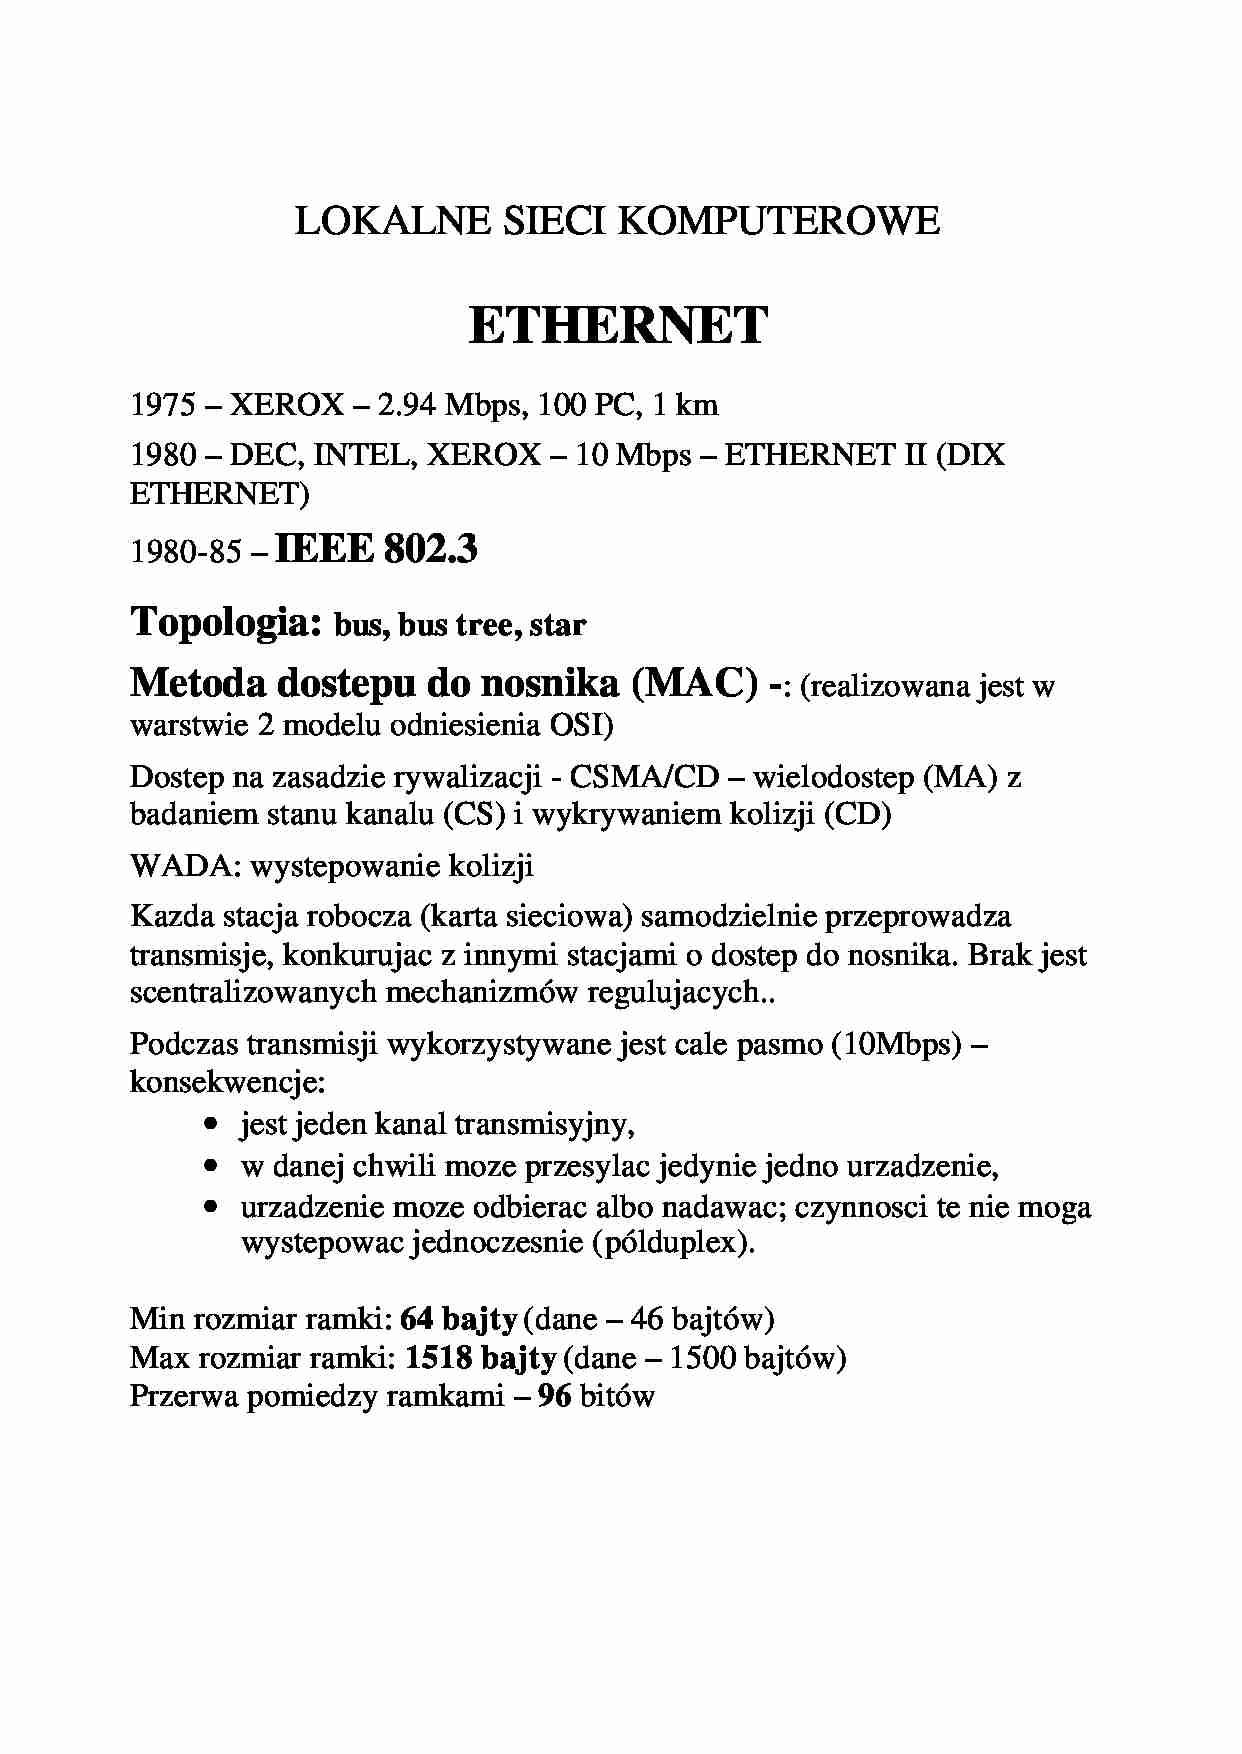 Lokalne sieci komputerowe - ethernet - strona 1